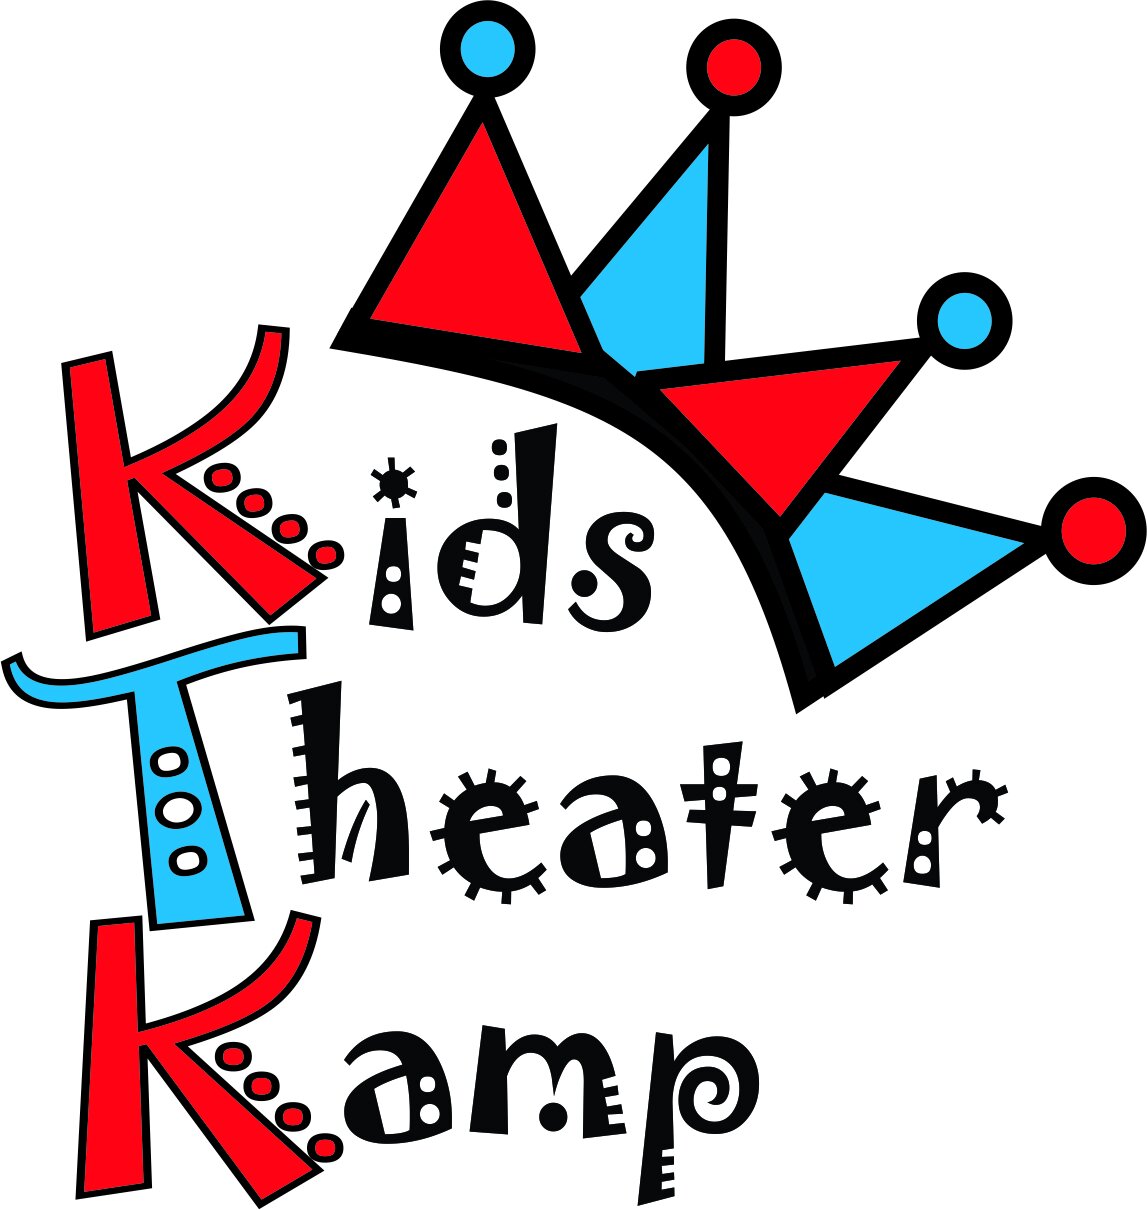 Kids Theatre Kamp